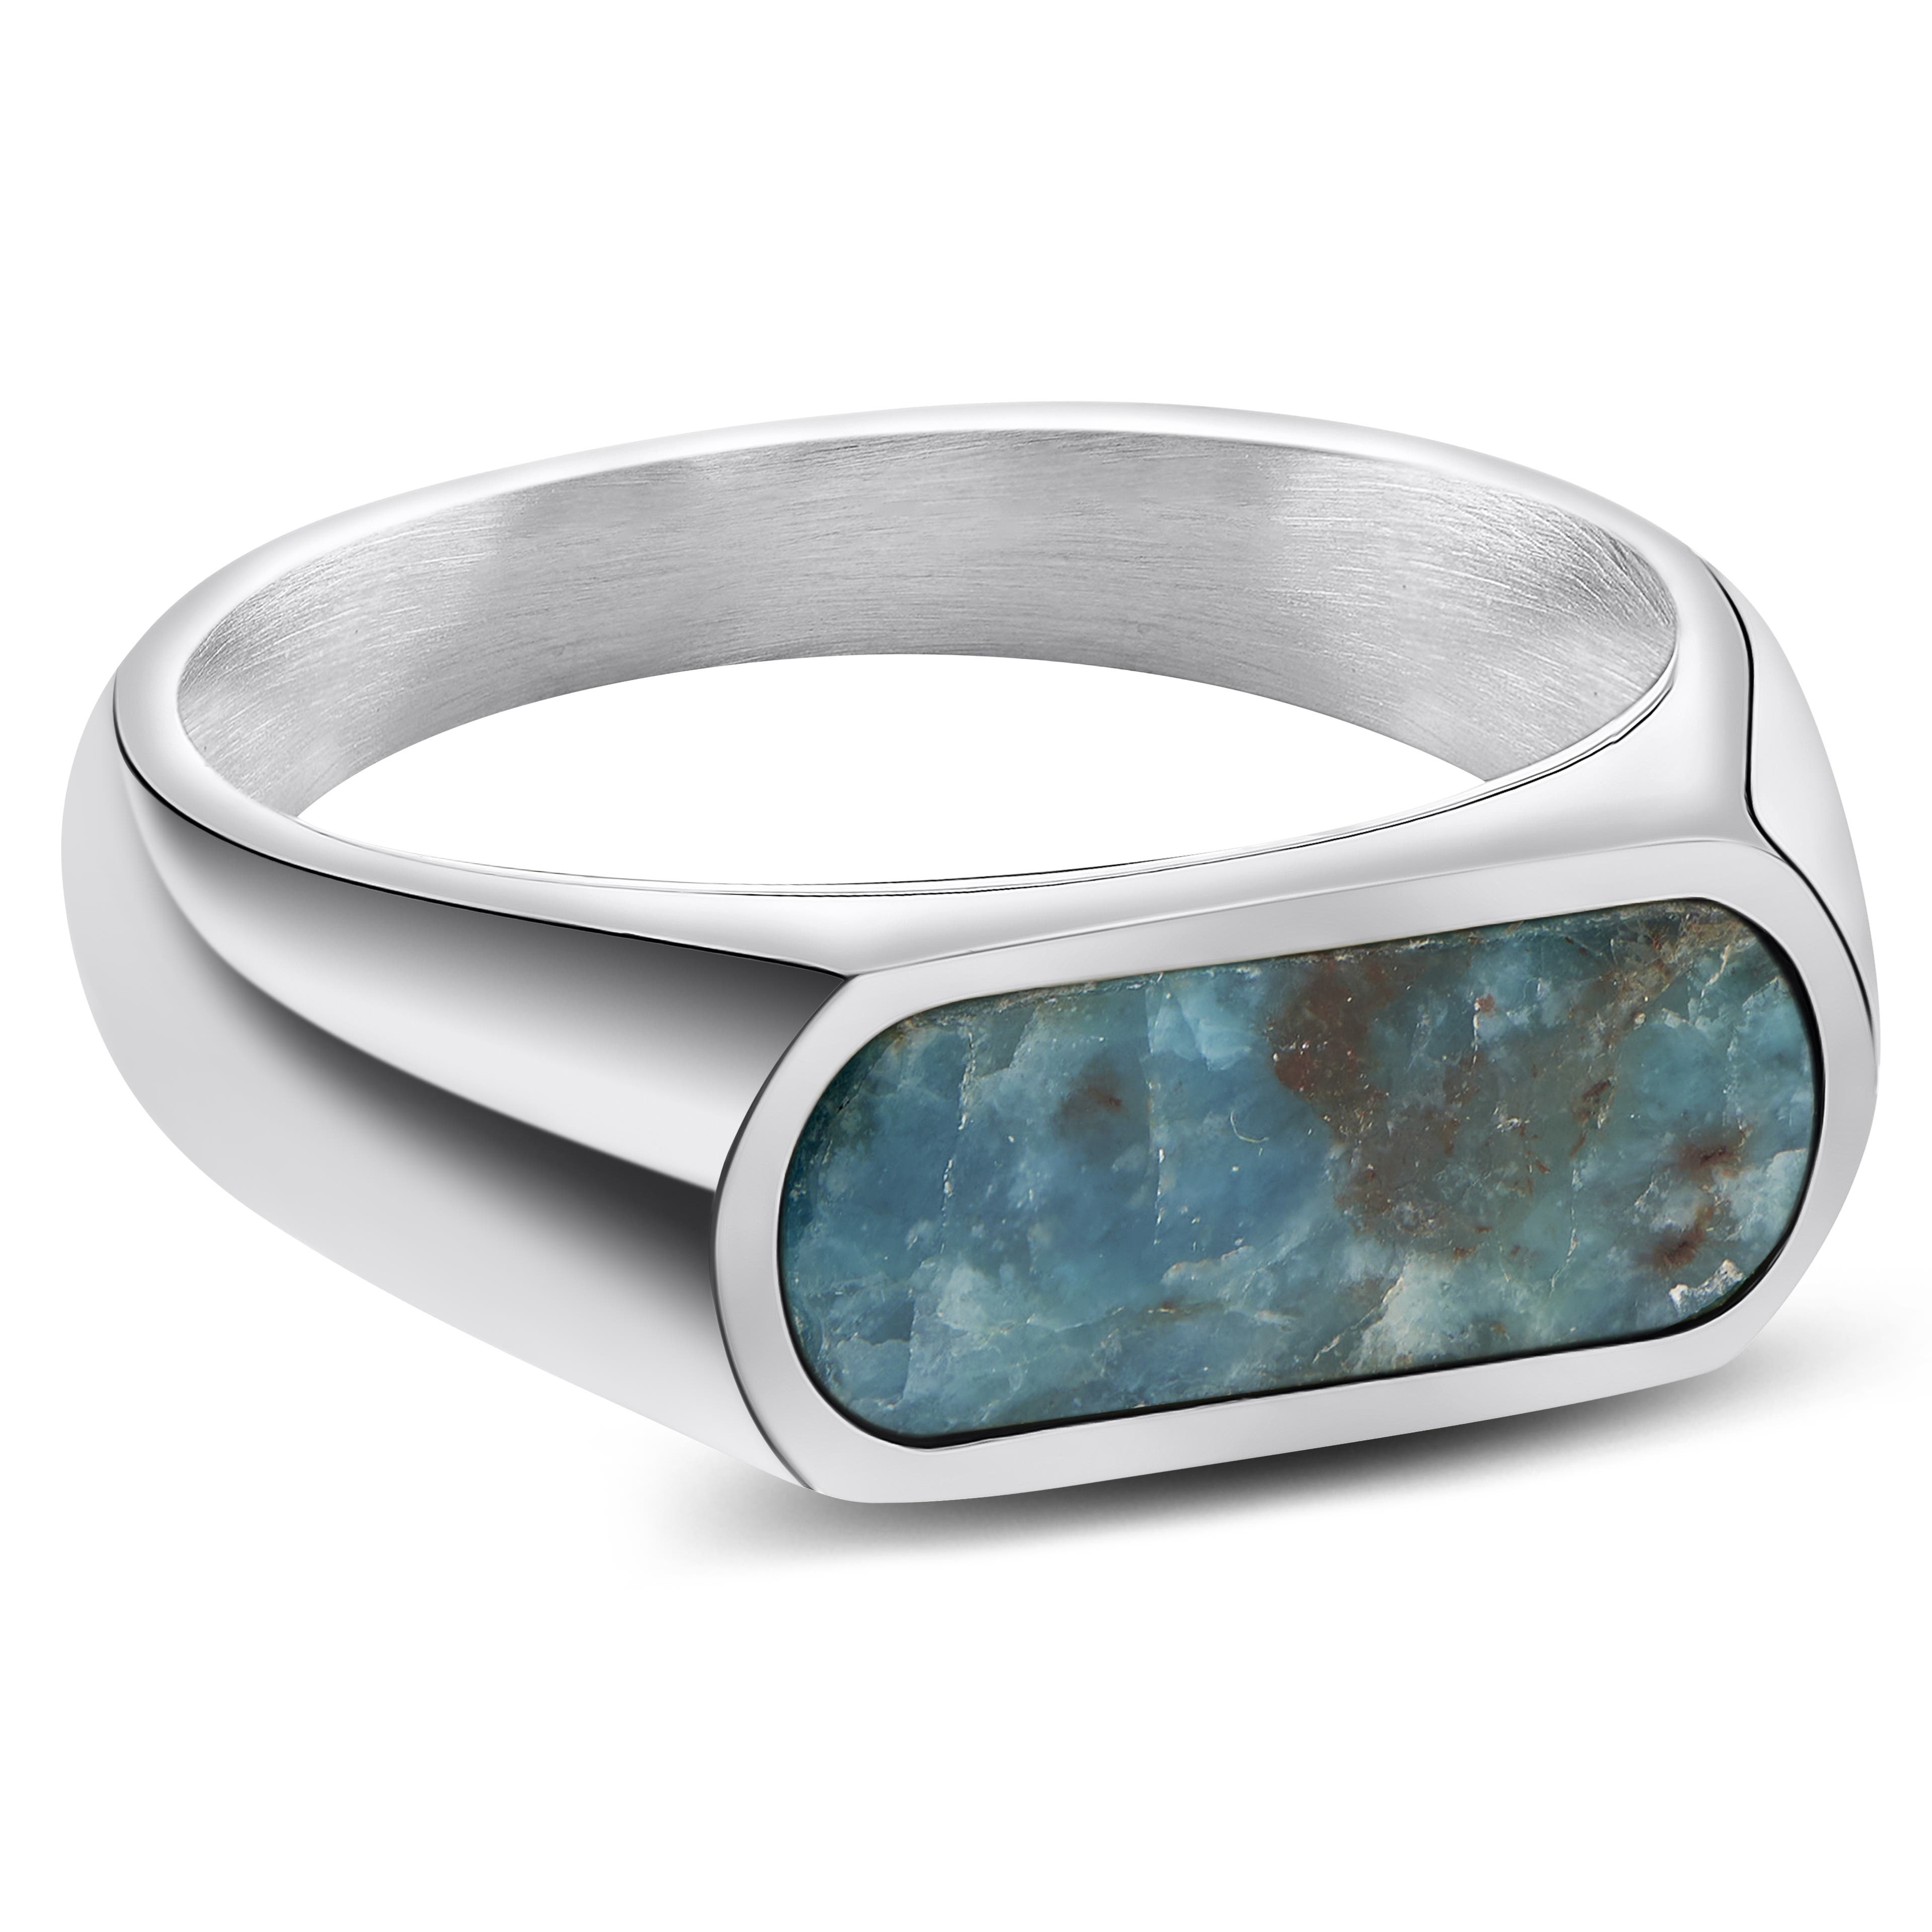 Orisun | Silver-Tone Stainless Steel Larimar Stone Signet Ring